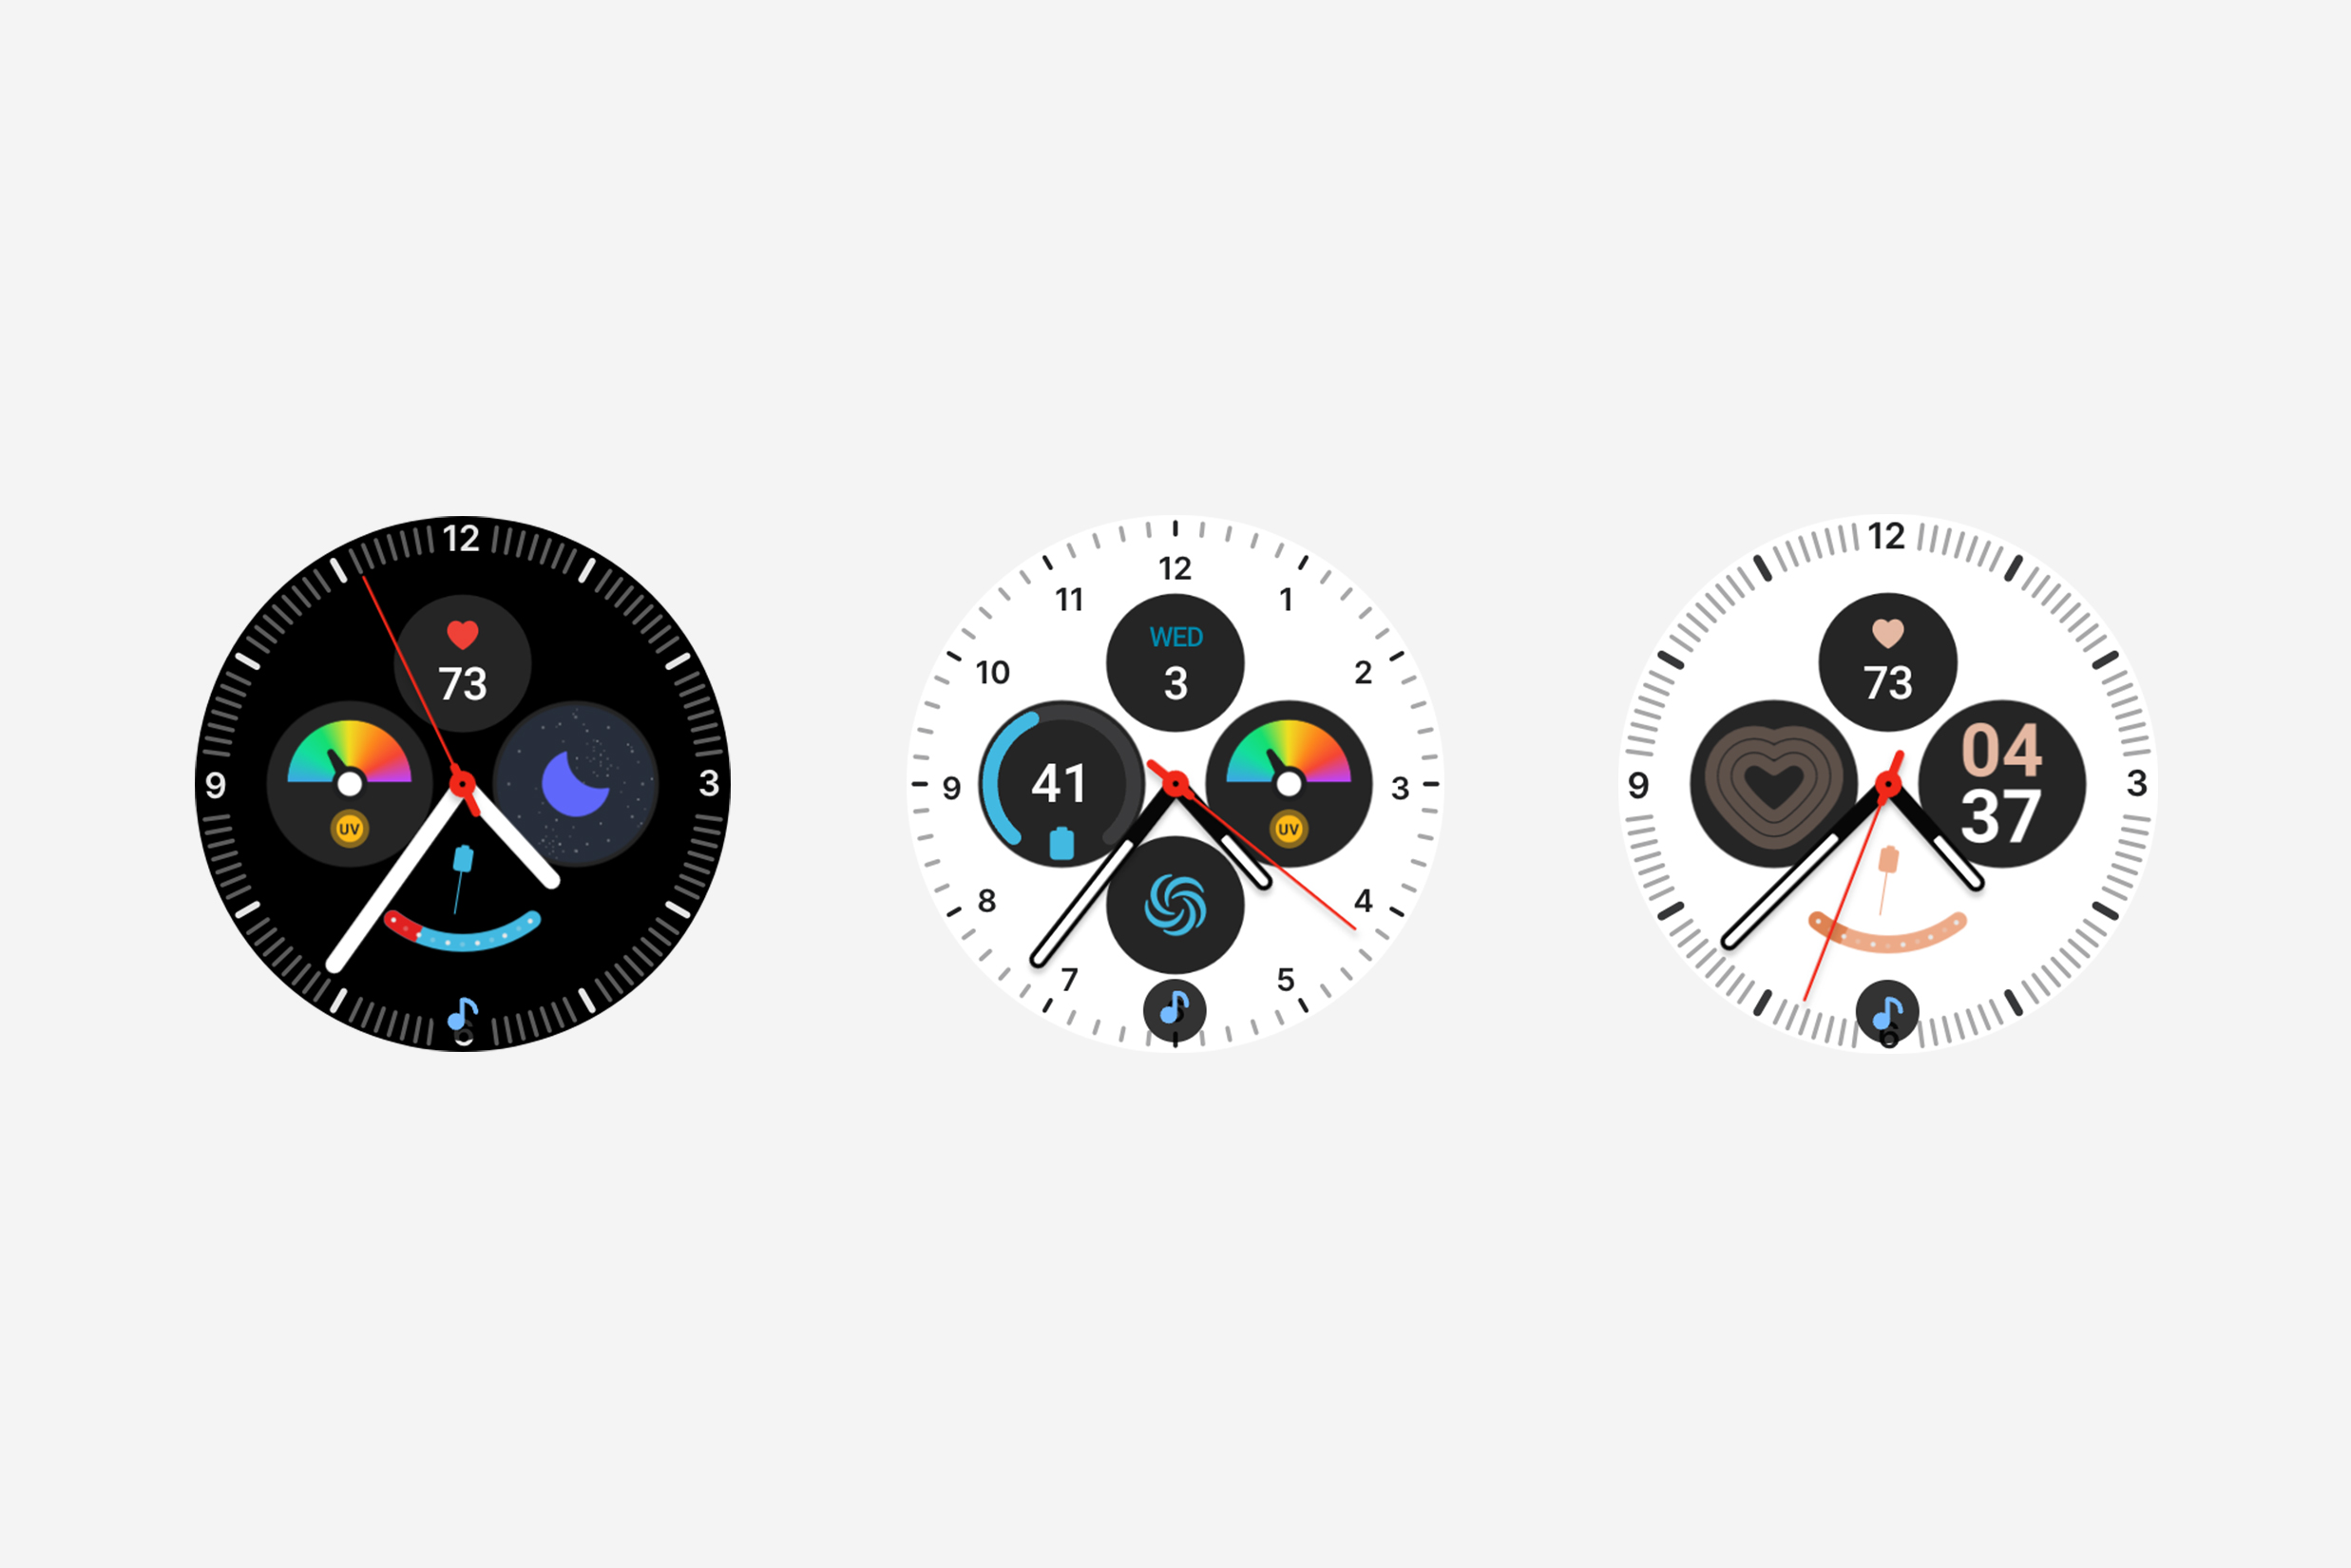 Analog Dashboard watch face for Samsung Galaxy Watch.